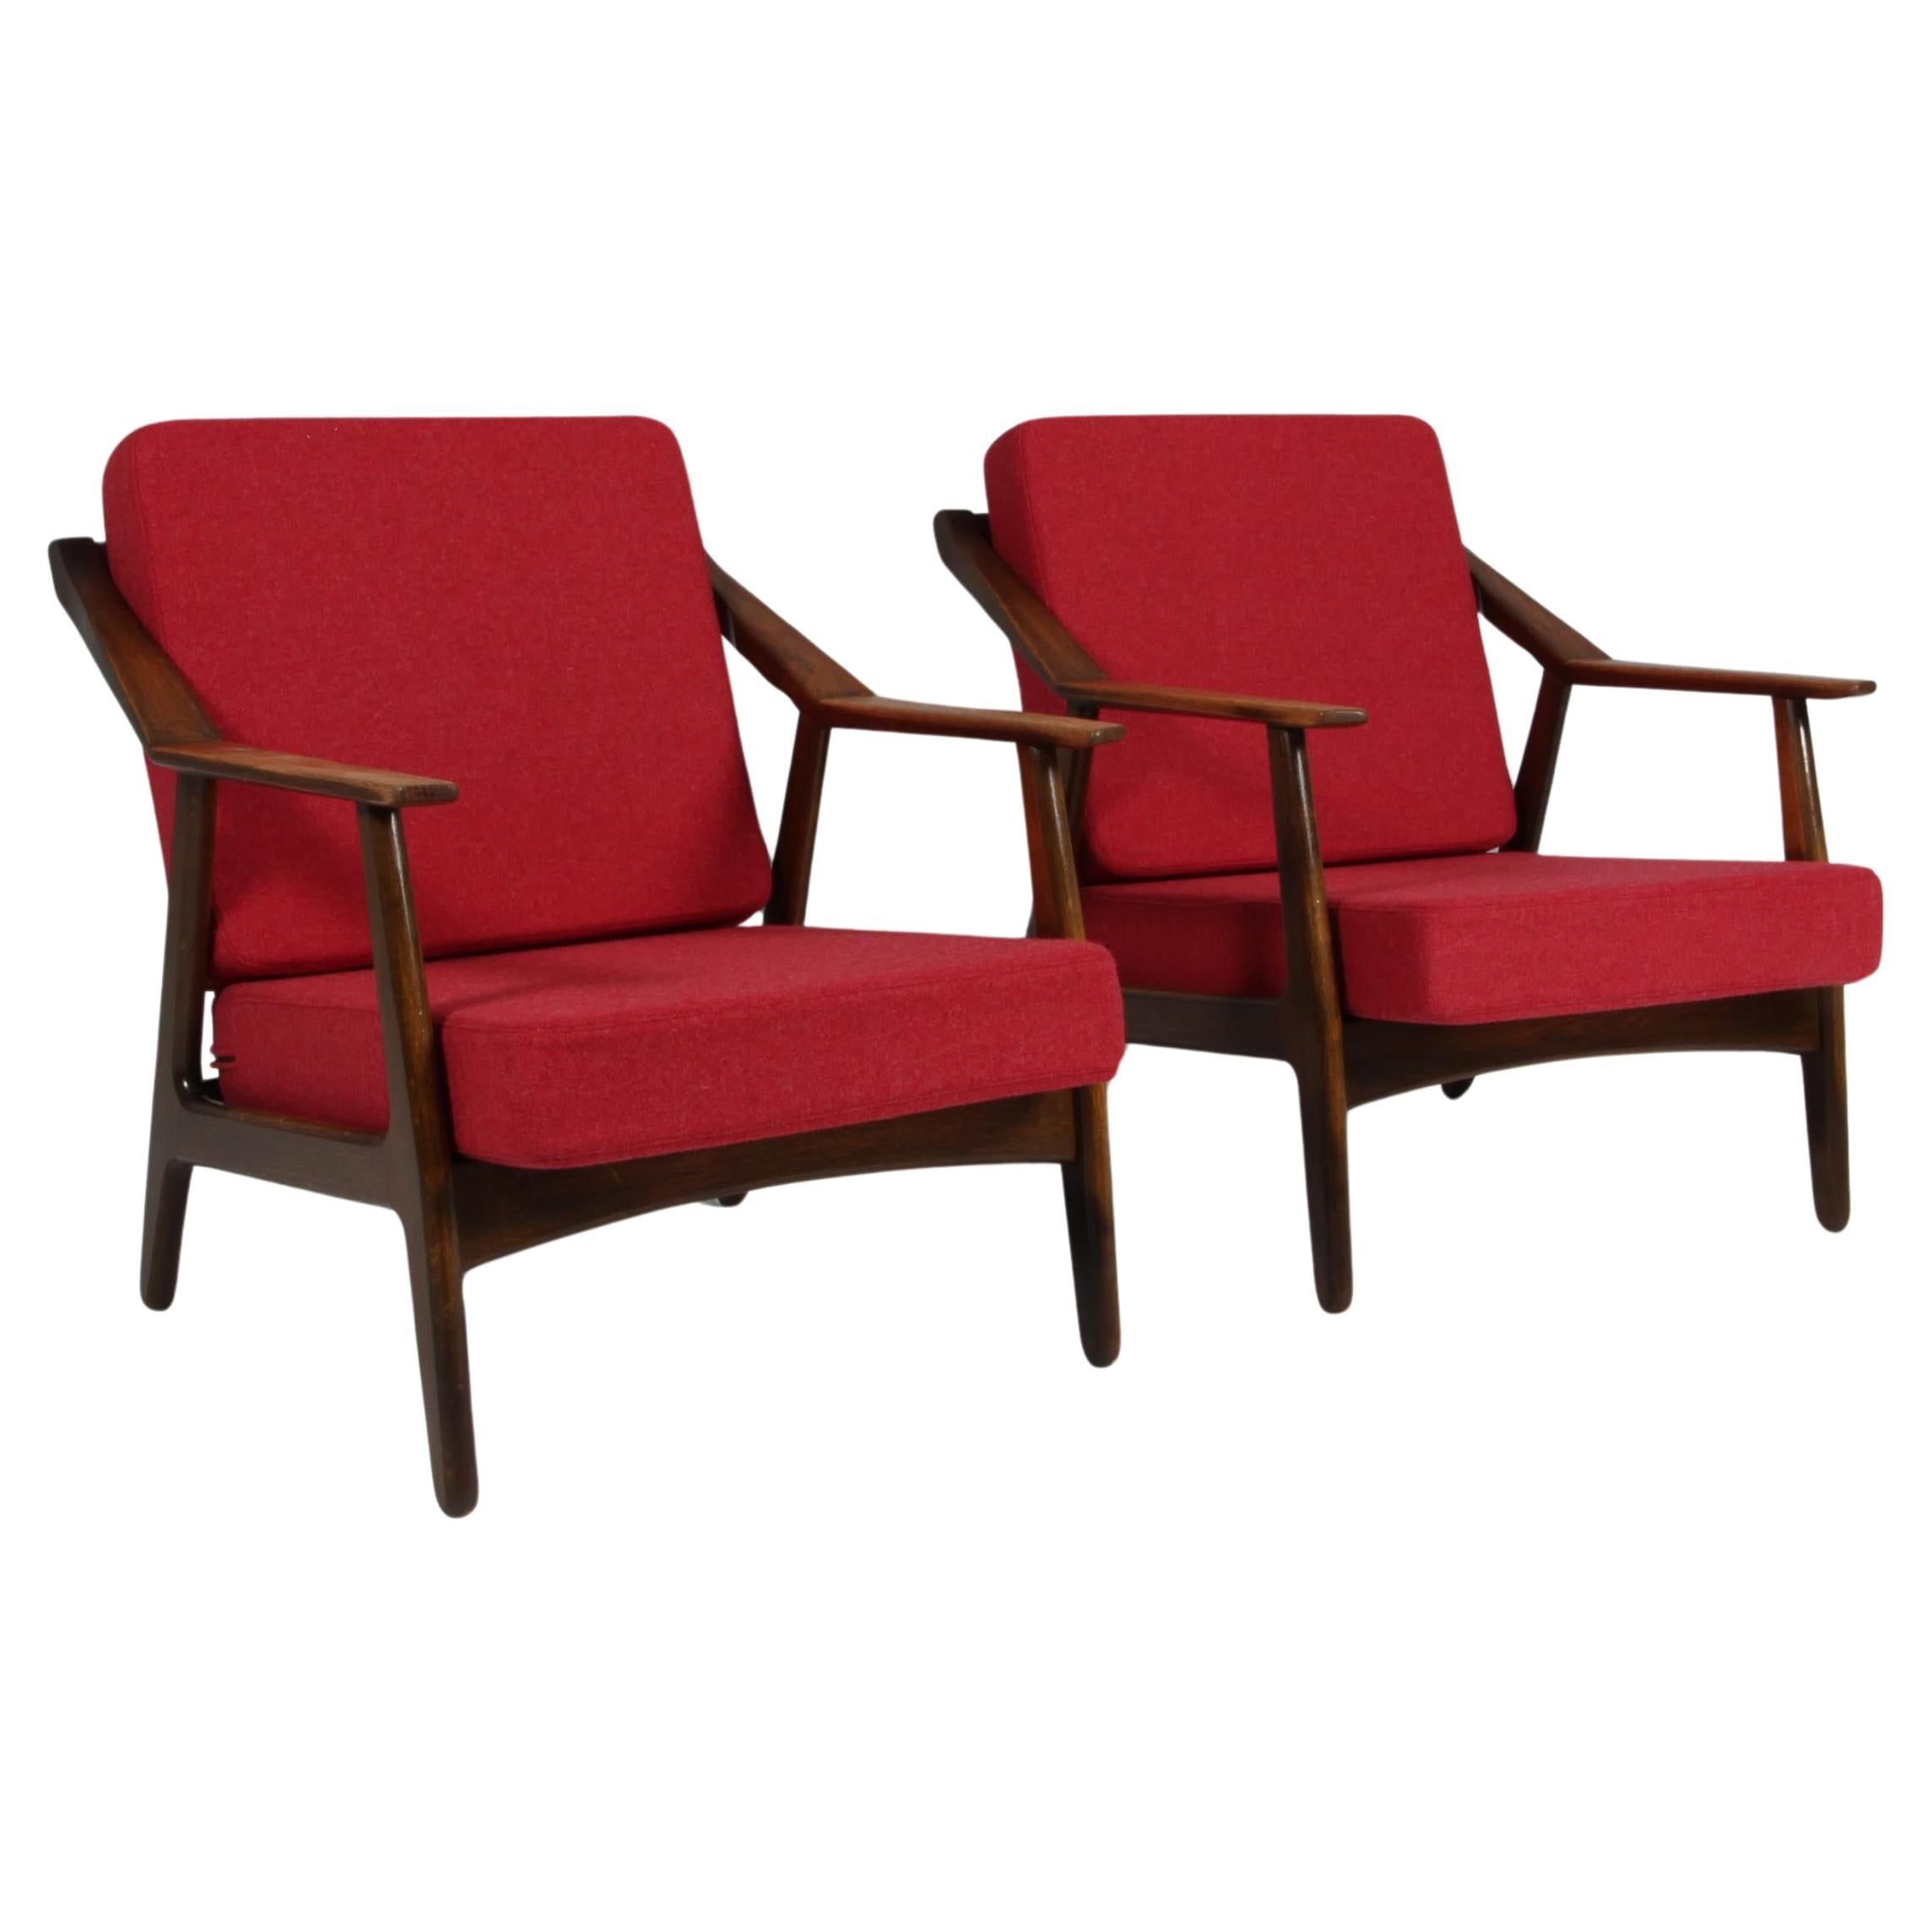 H. Brockmann-Petersen Lounge Chairs